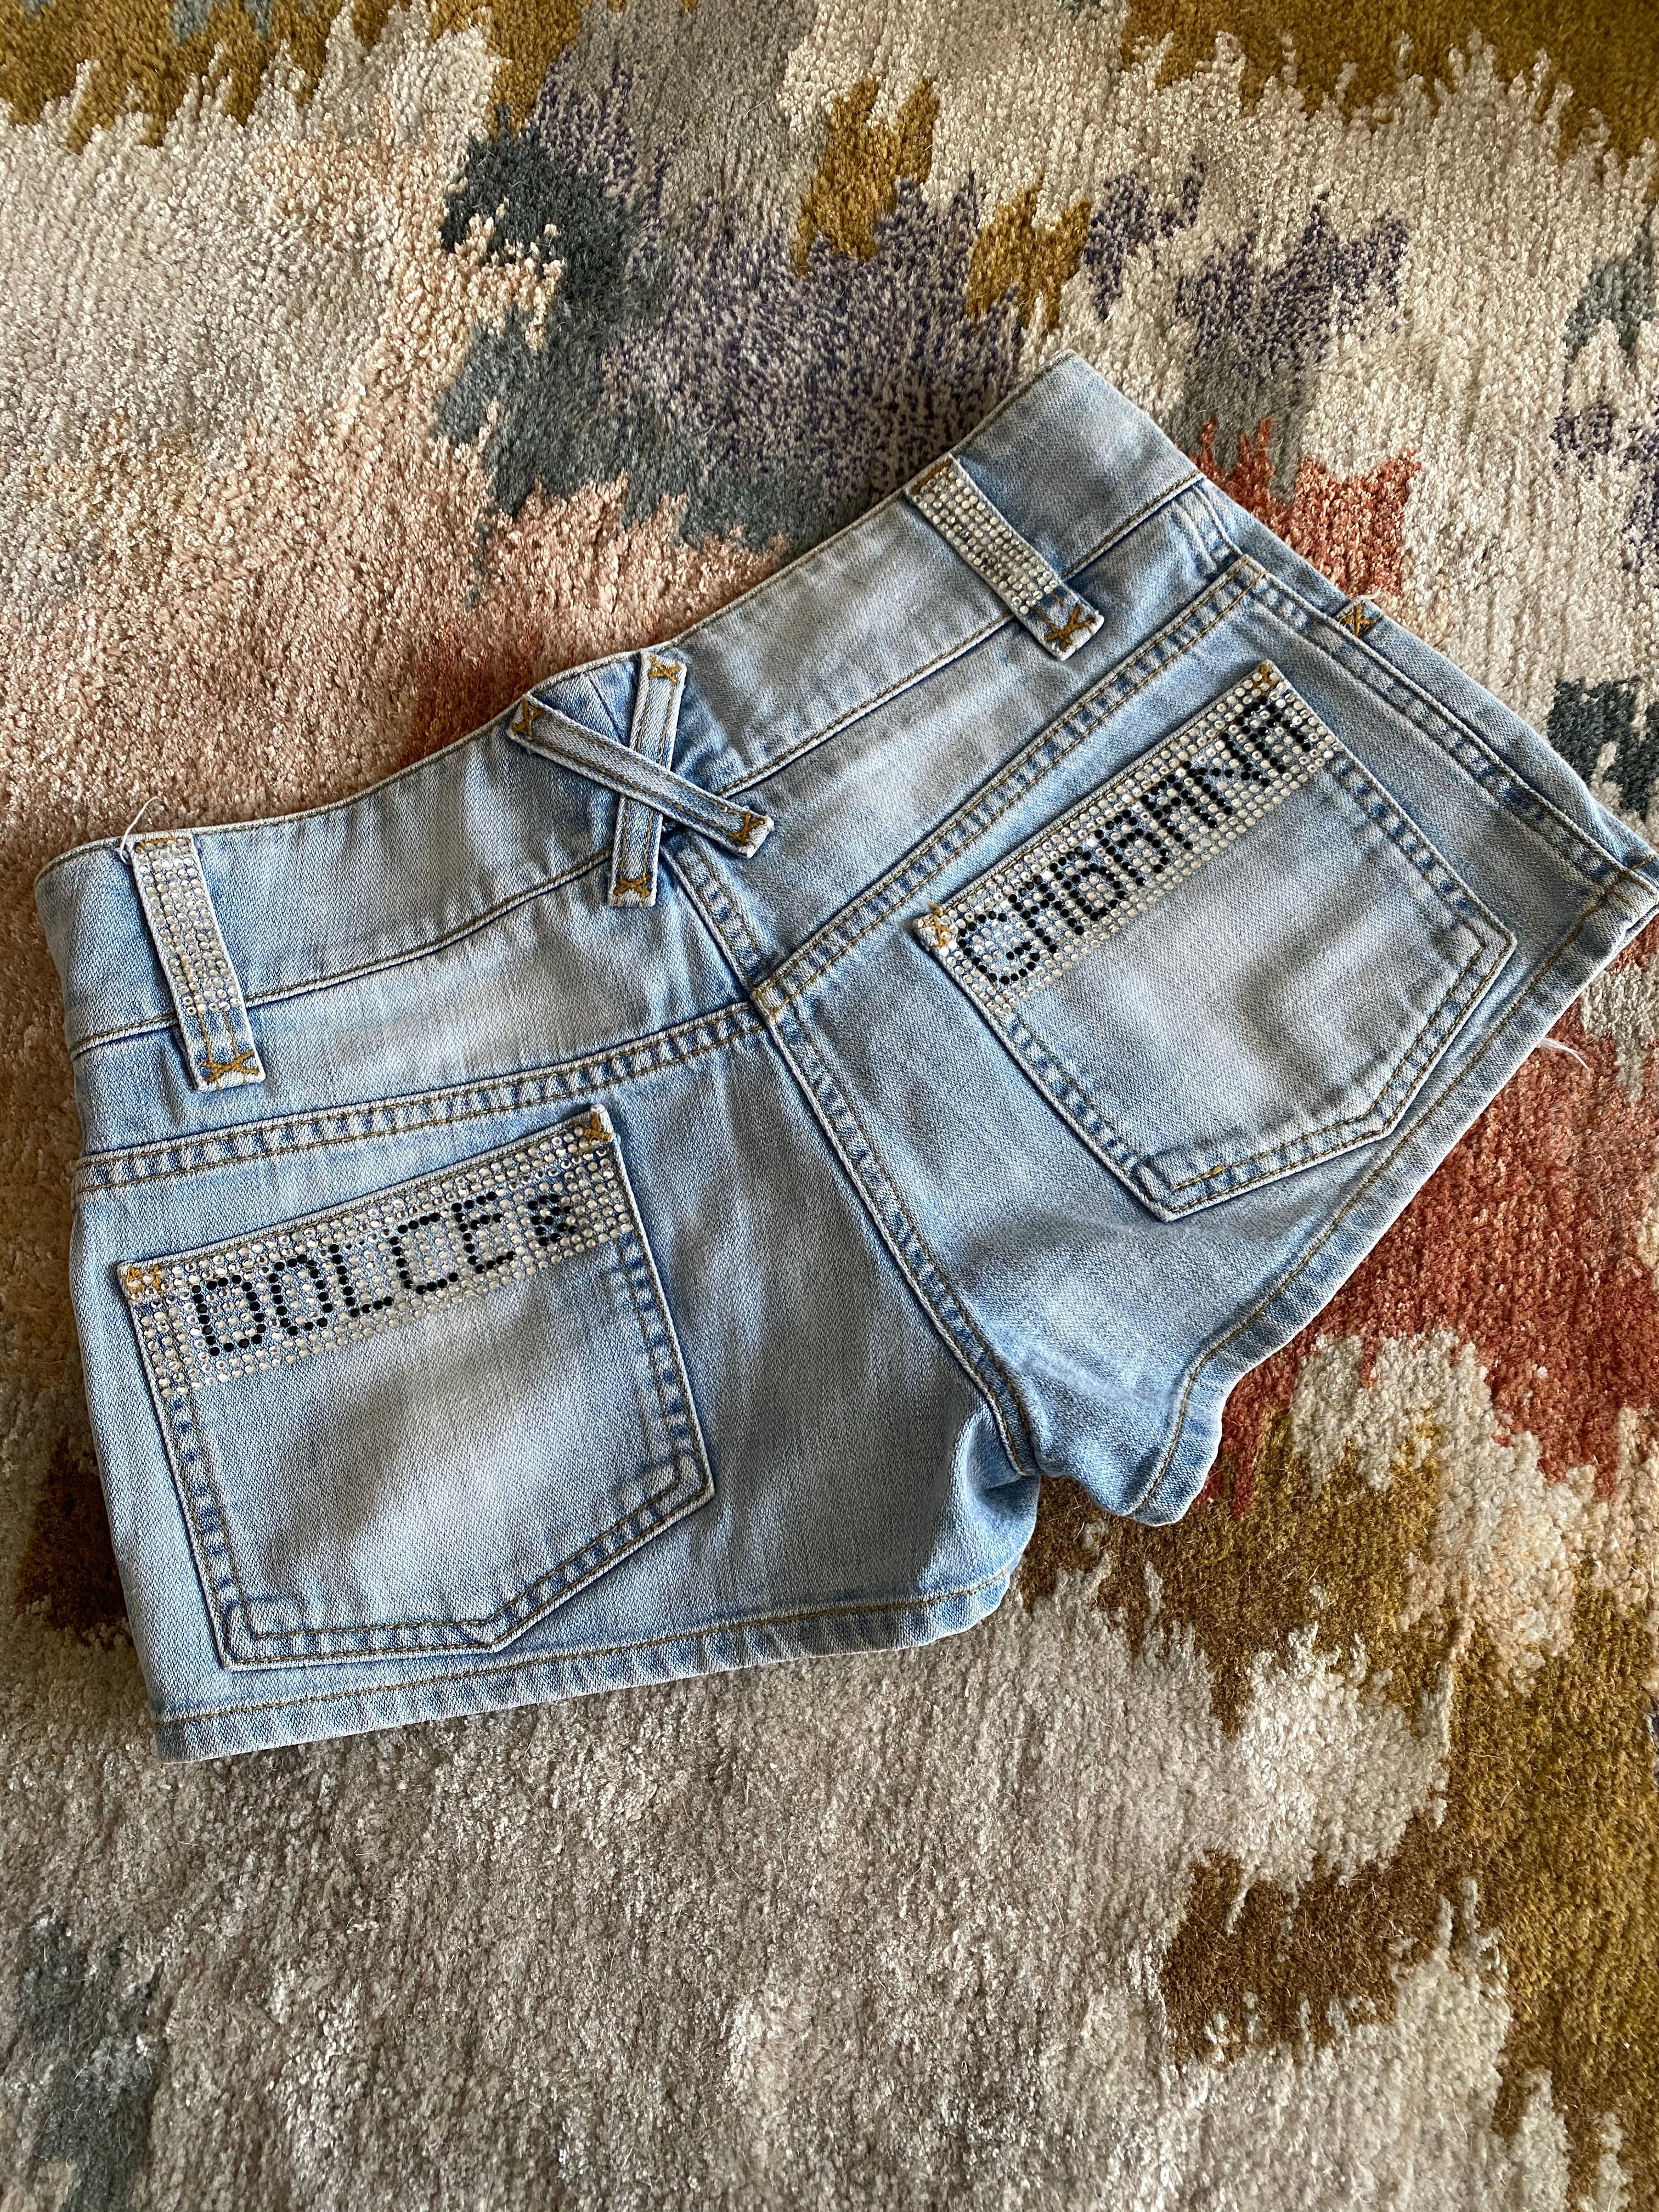 Dolce and Gabbana Swarovski Crystal Jeans